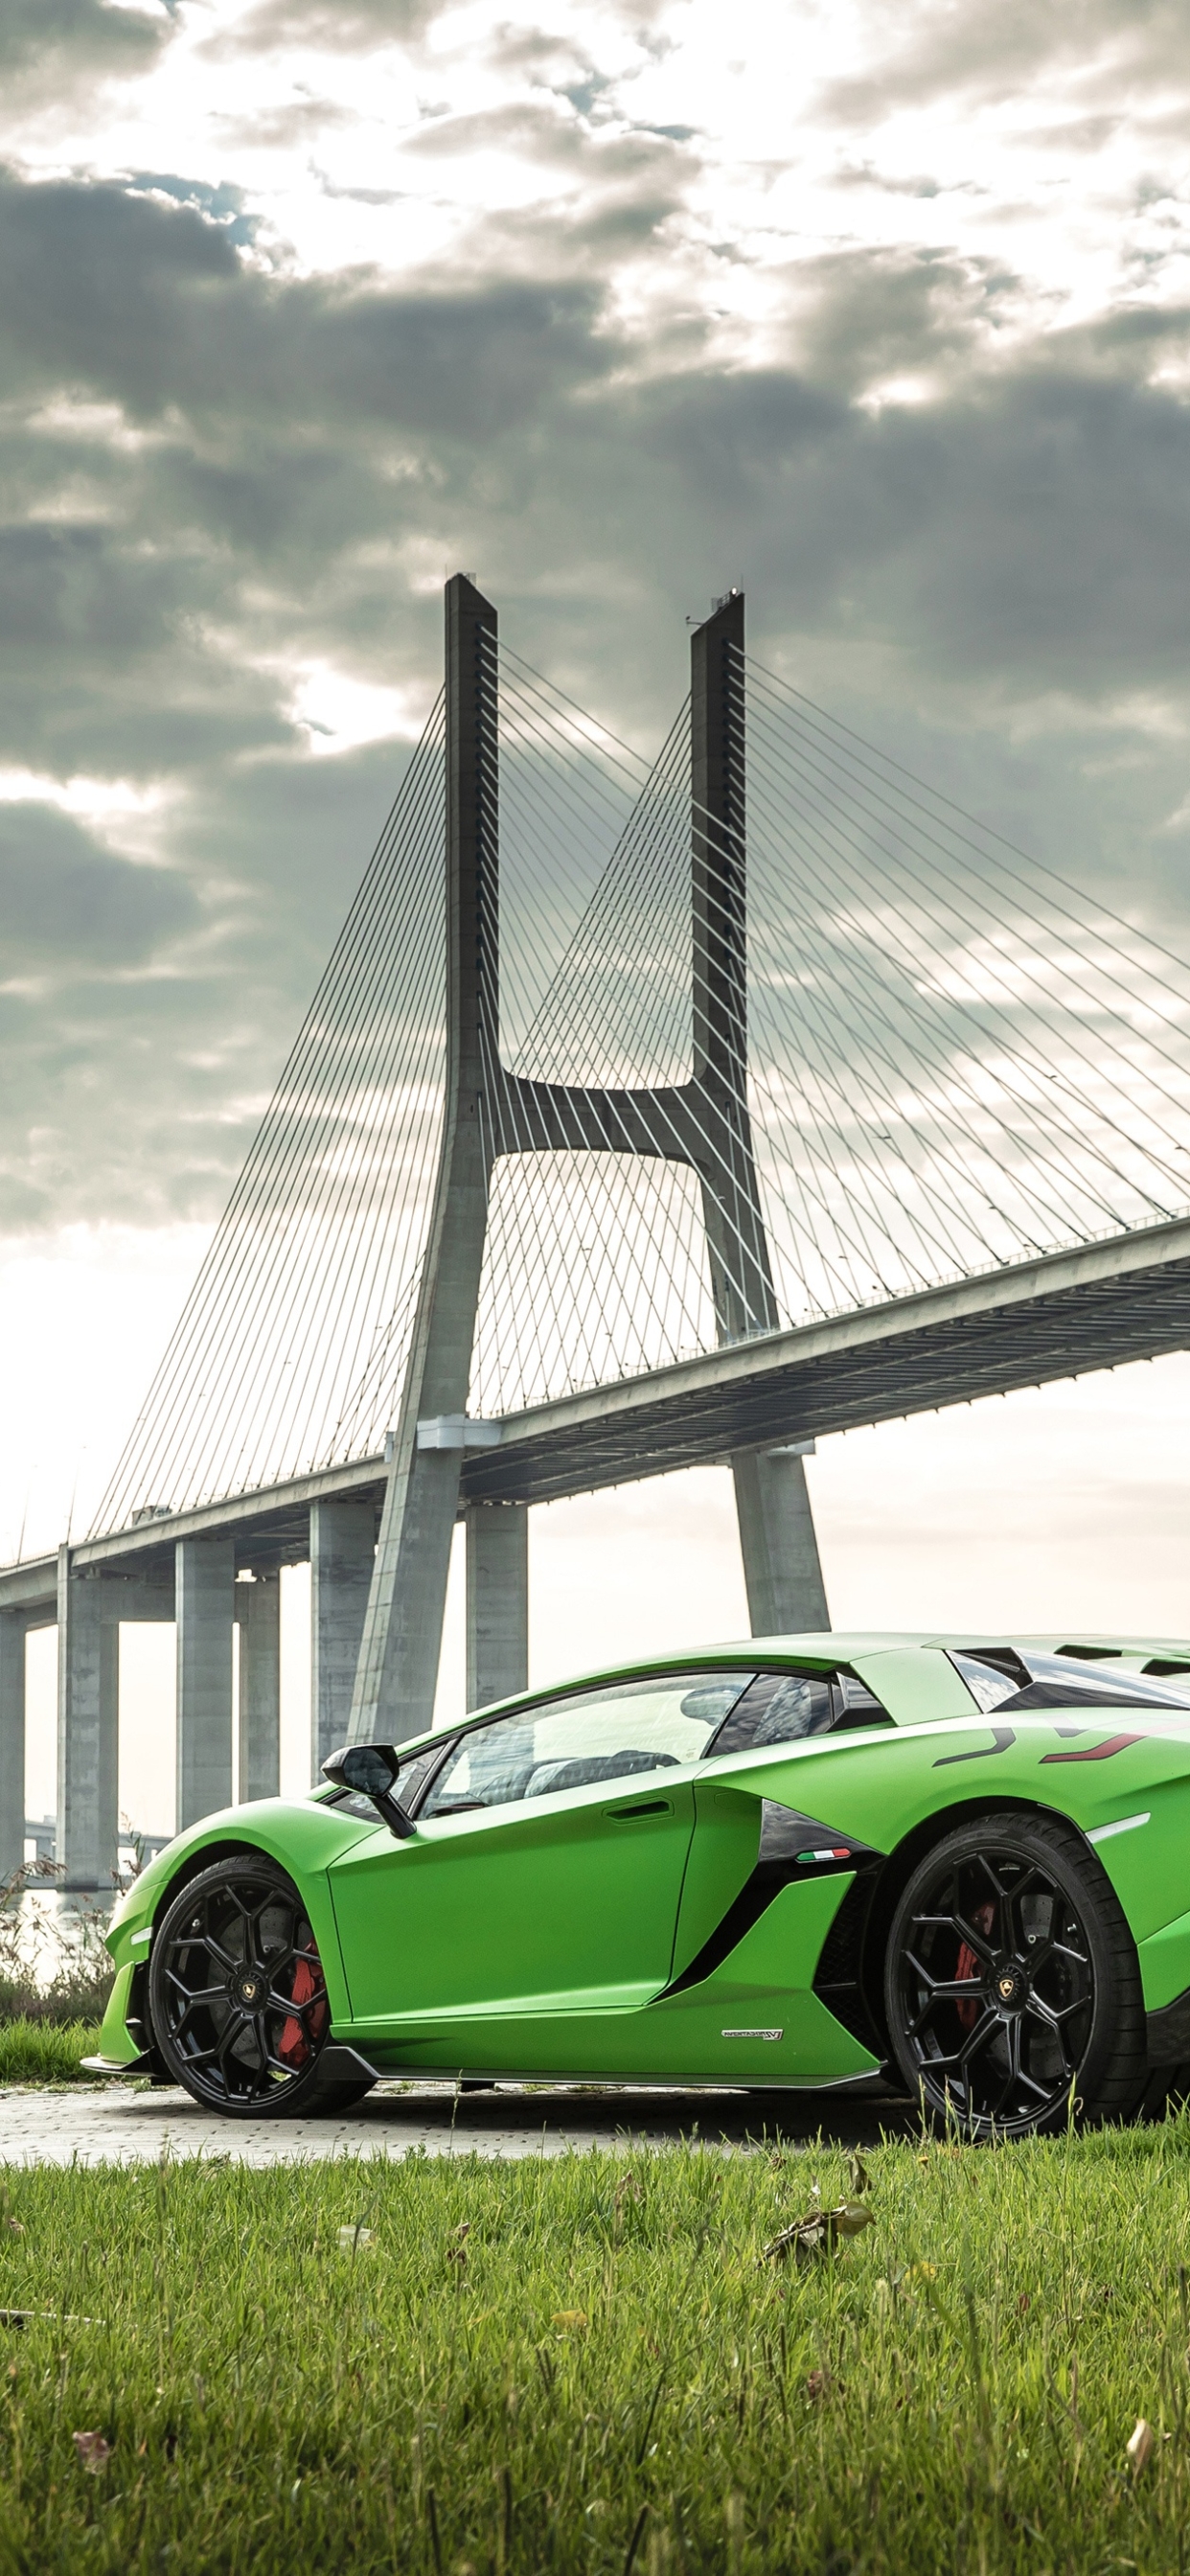 Baixar papel de parede para celular de Lamborghini, Super Carro, Lamborghini Aventador, Veículos, Carro Verde, Lamborghini Aventador Svj gratuito.